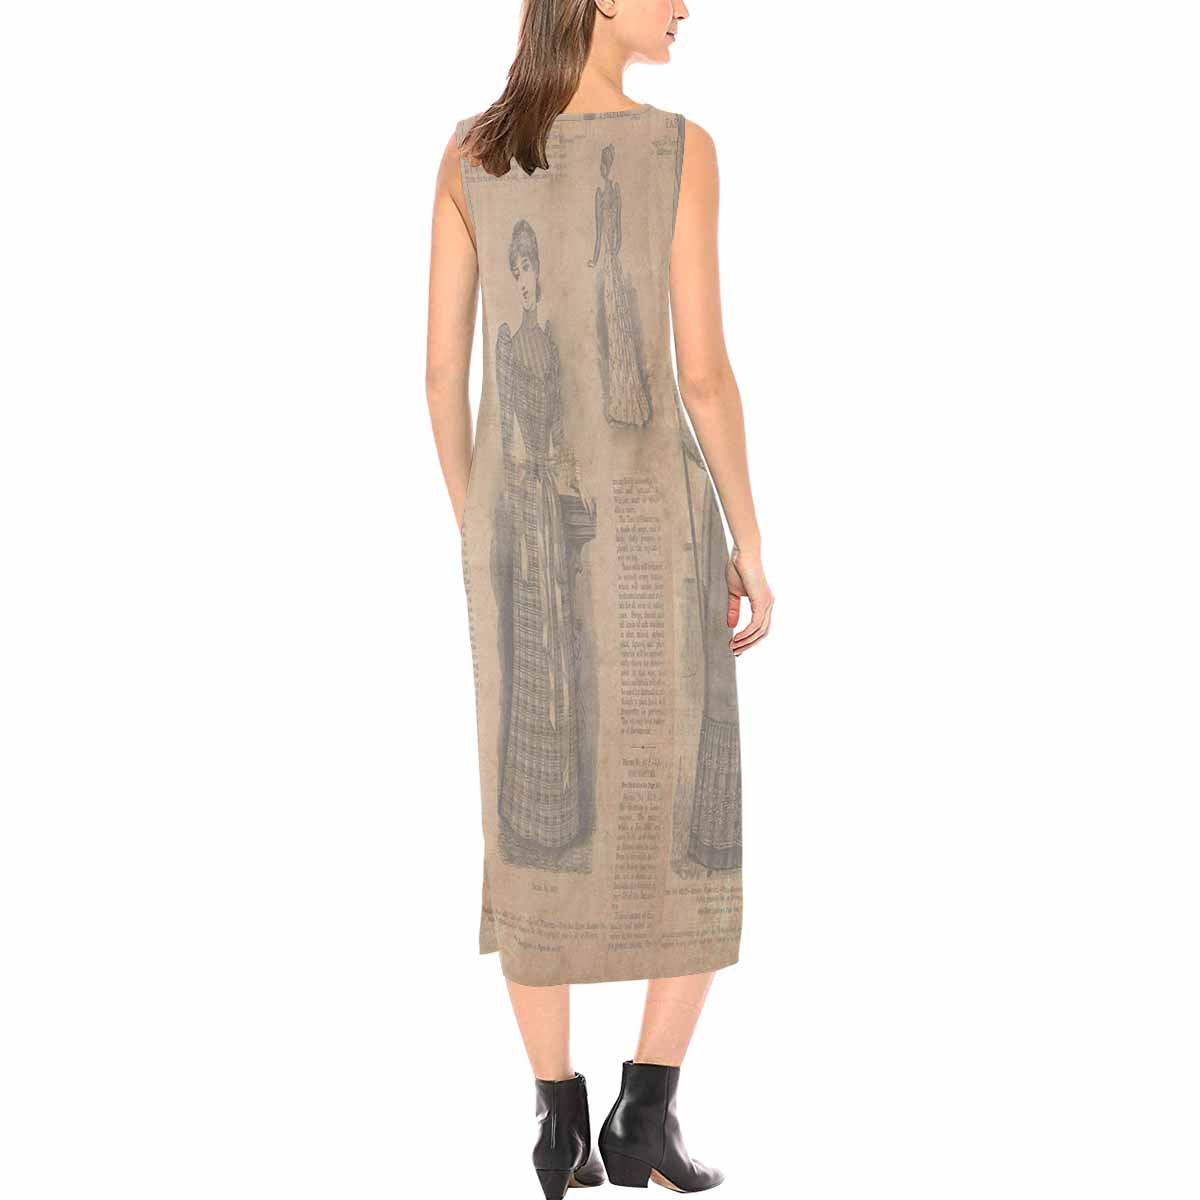 Antique General long chic dress, MODEL 09538, design 35